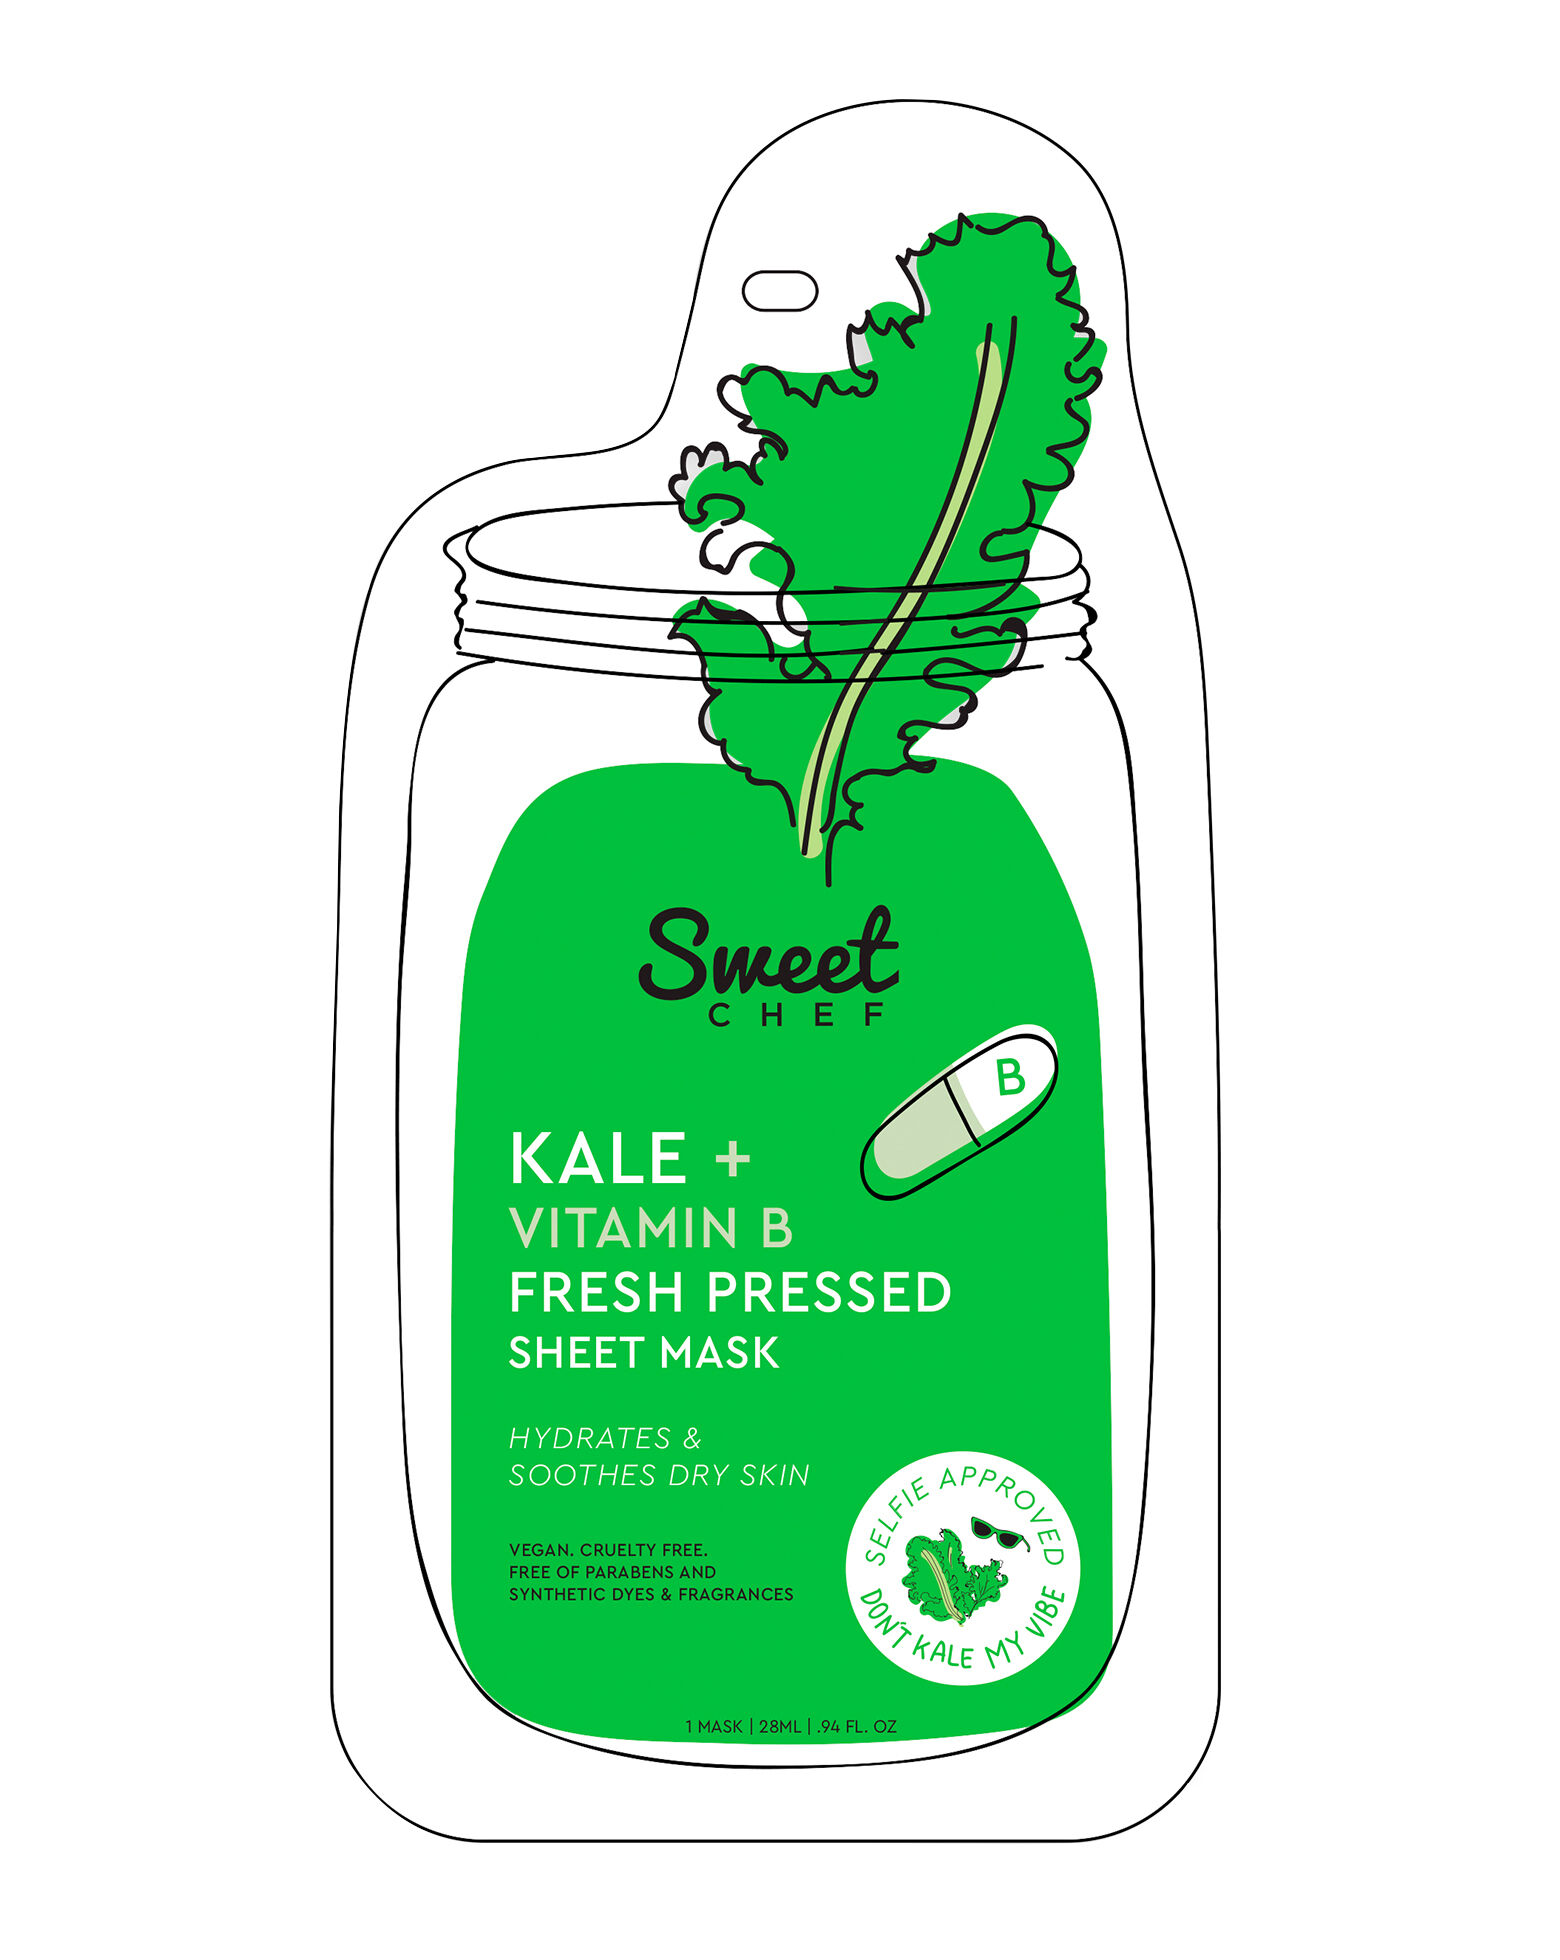 Sweet Chef - Kale + Vitamin B Fresh Pressed Sheet Mask